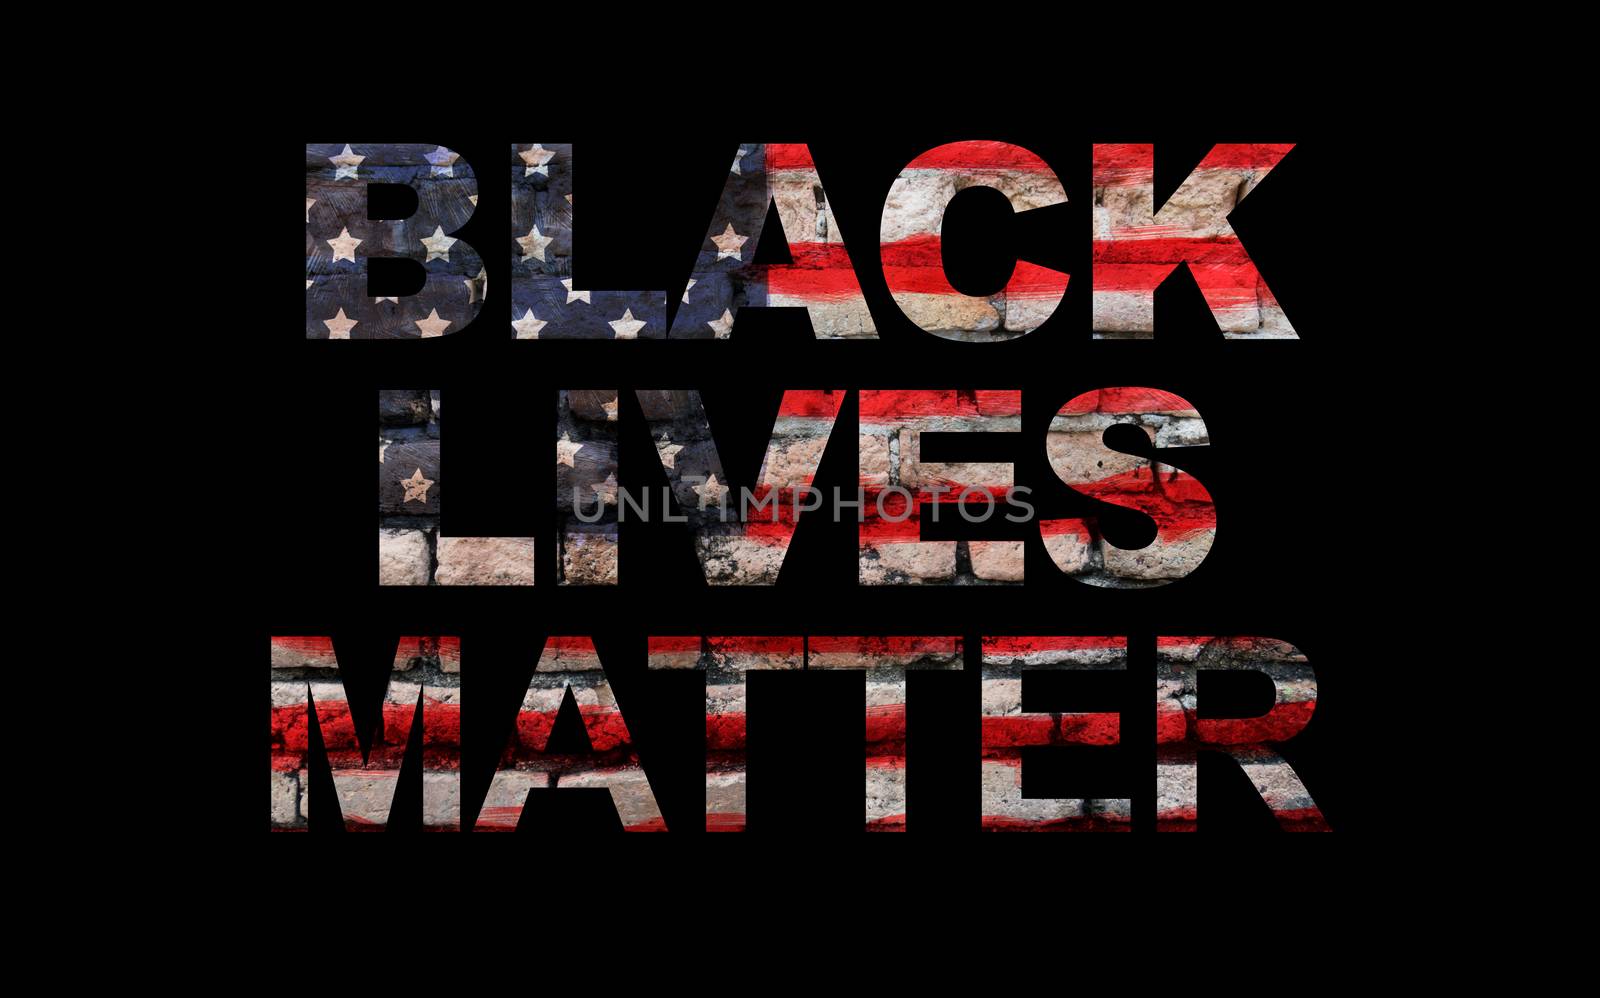 Black lives matter slogan on American flag, black background by asiandelight